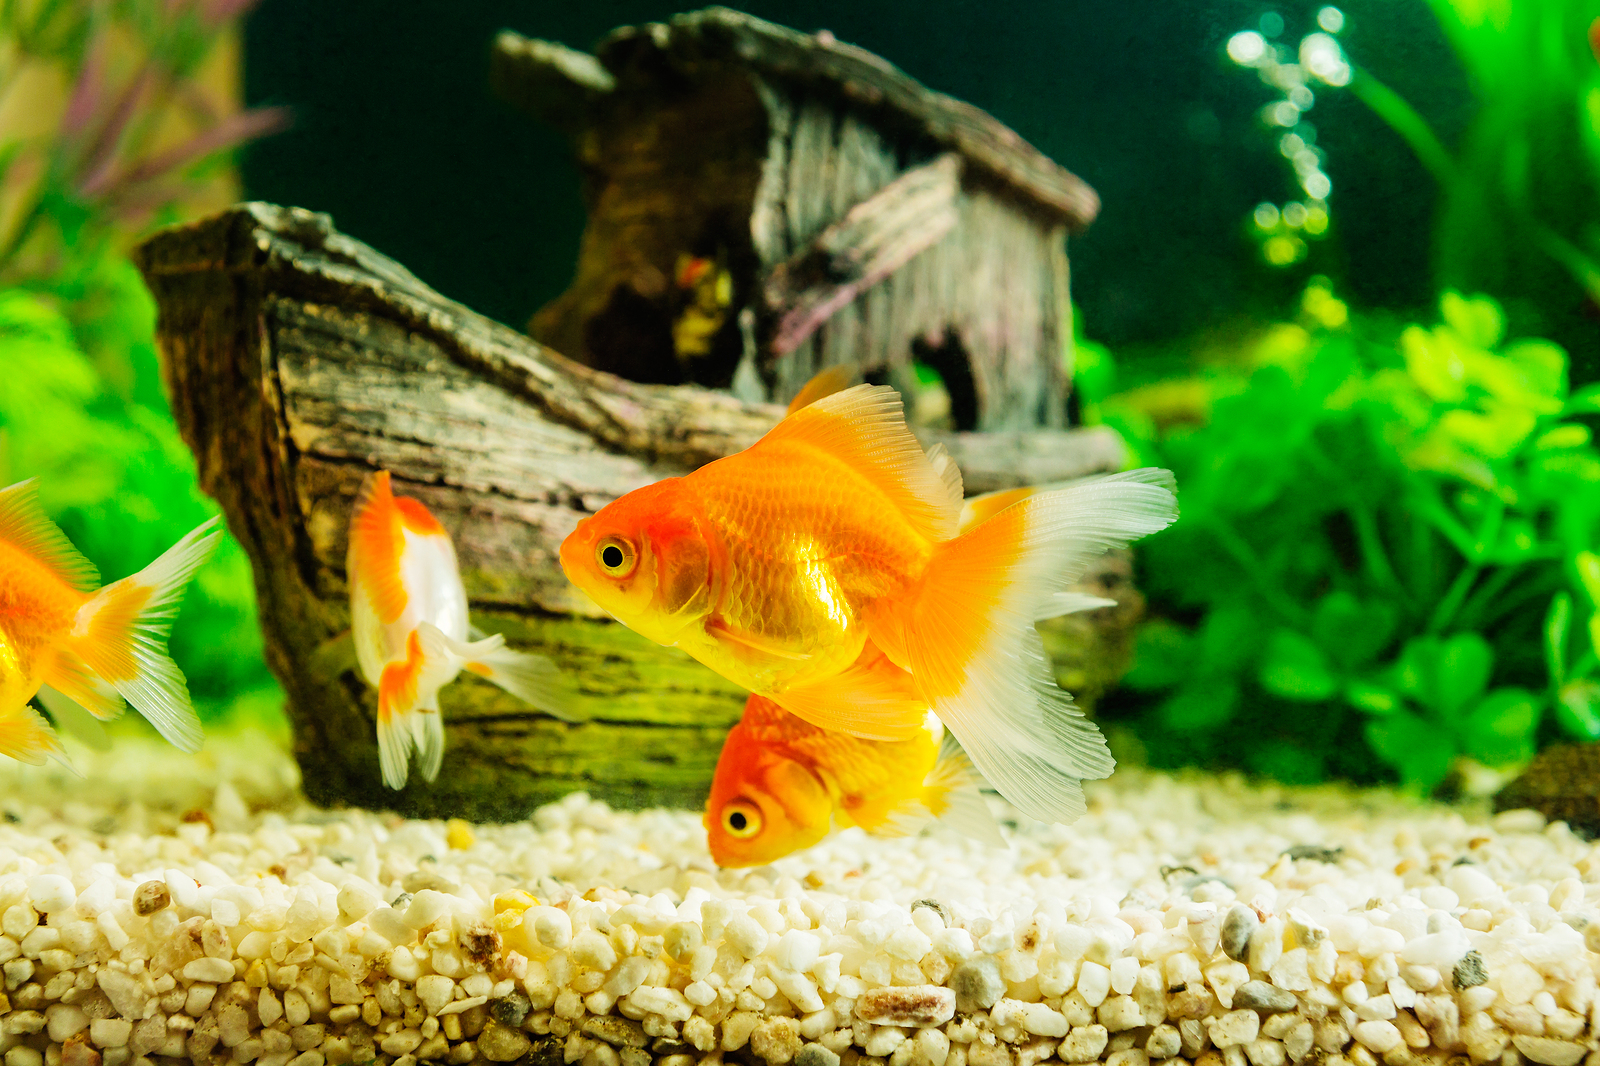 Goldfish in aquarium with green plants background